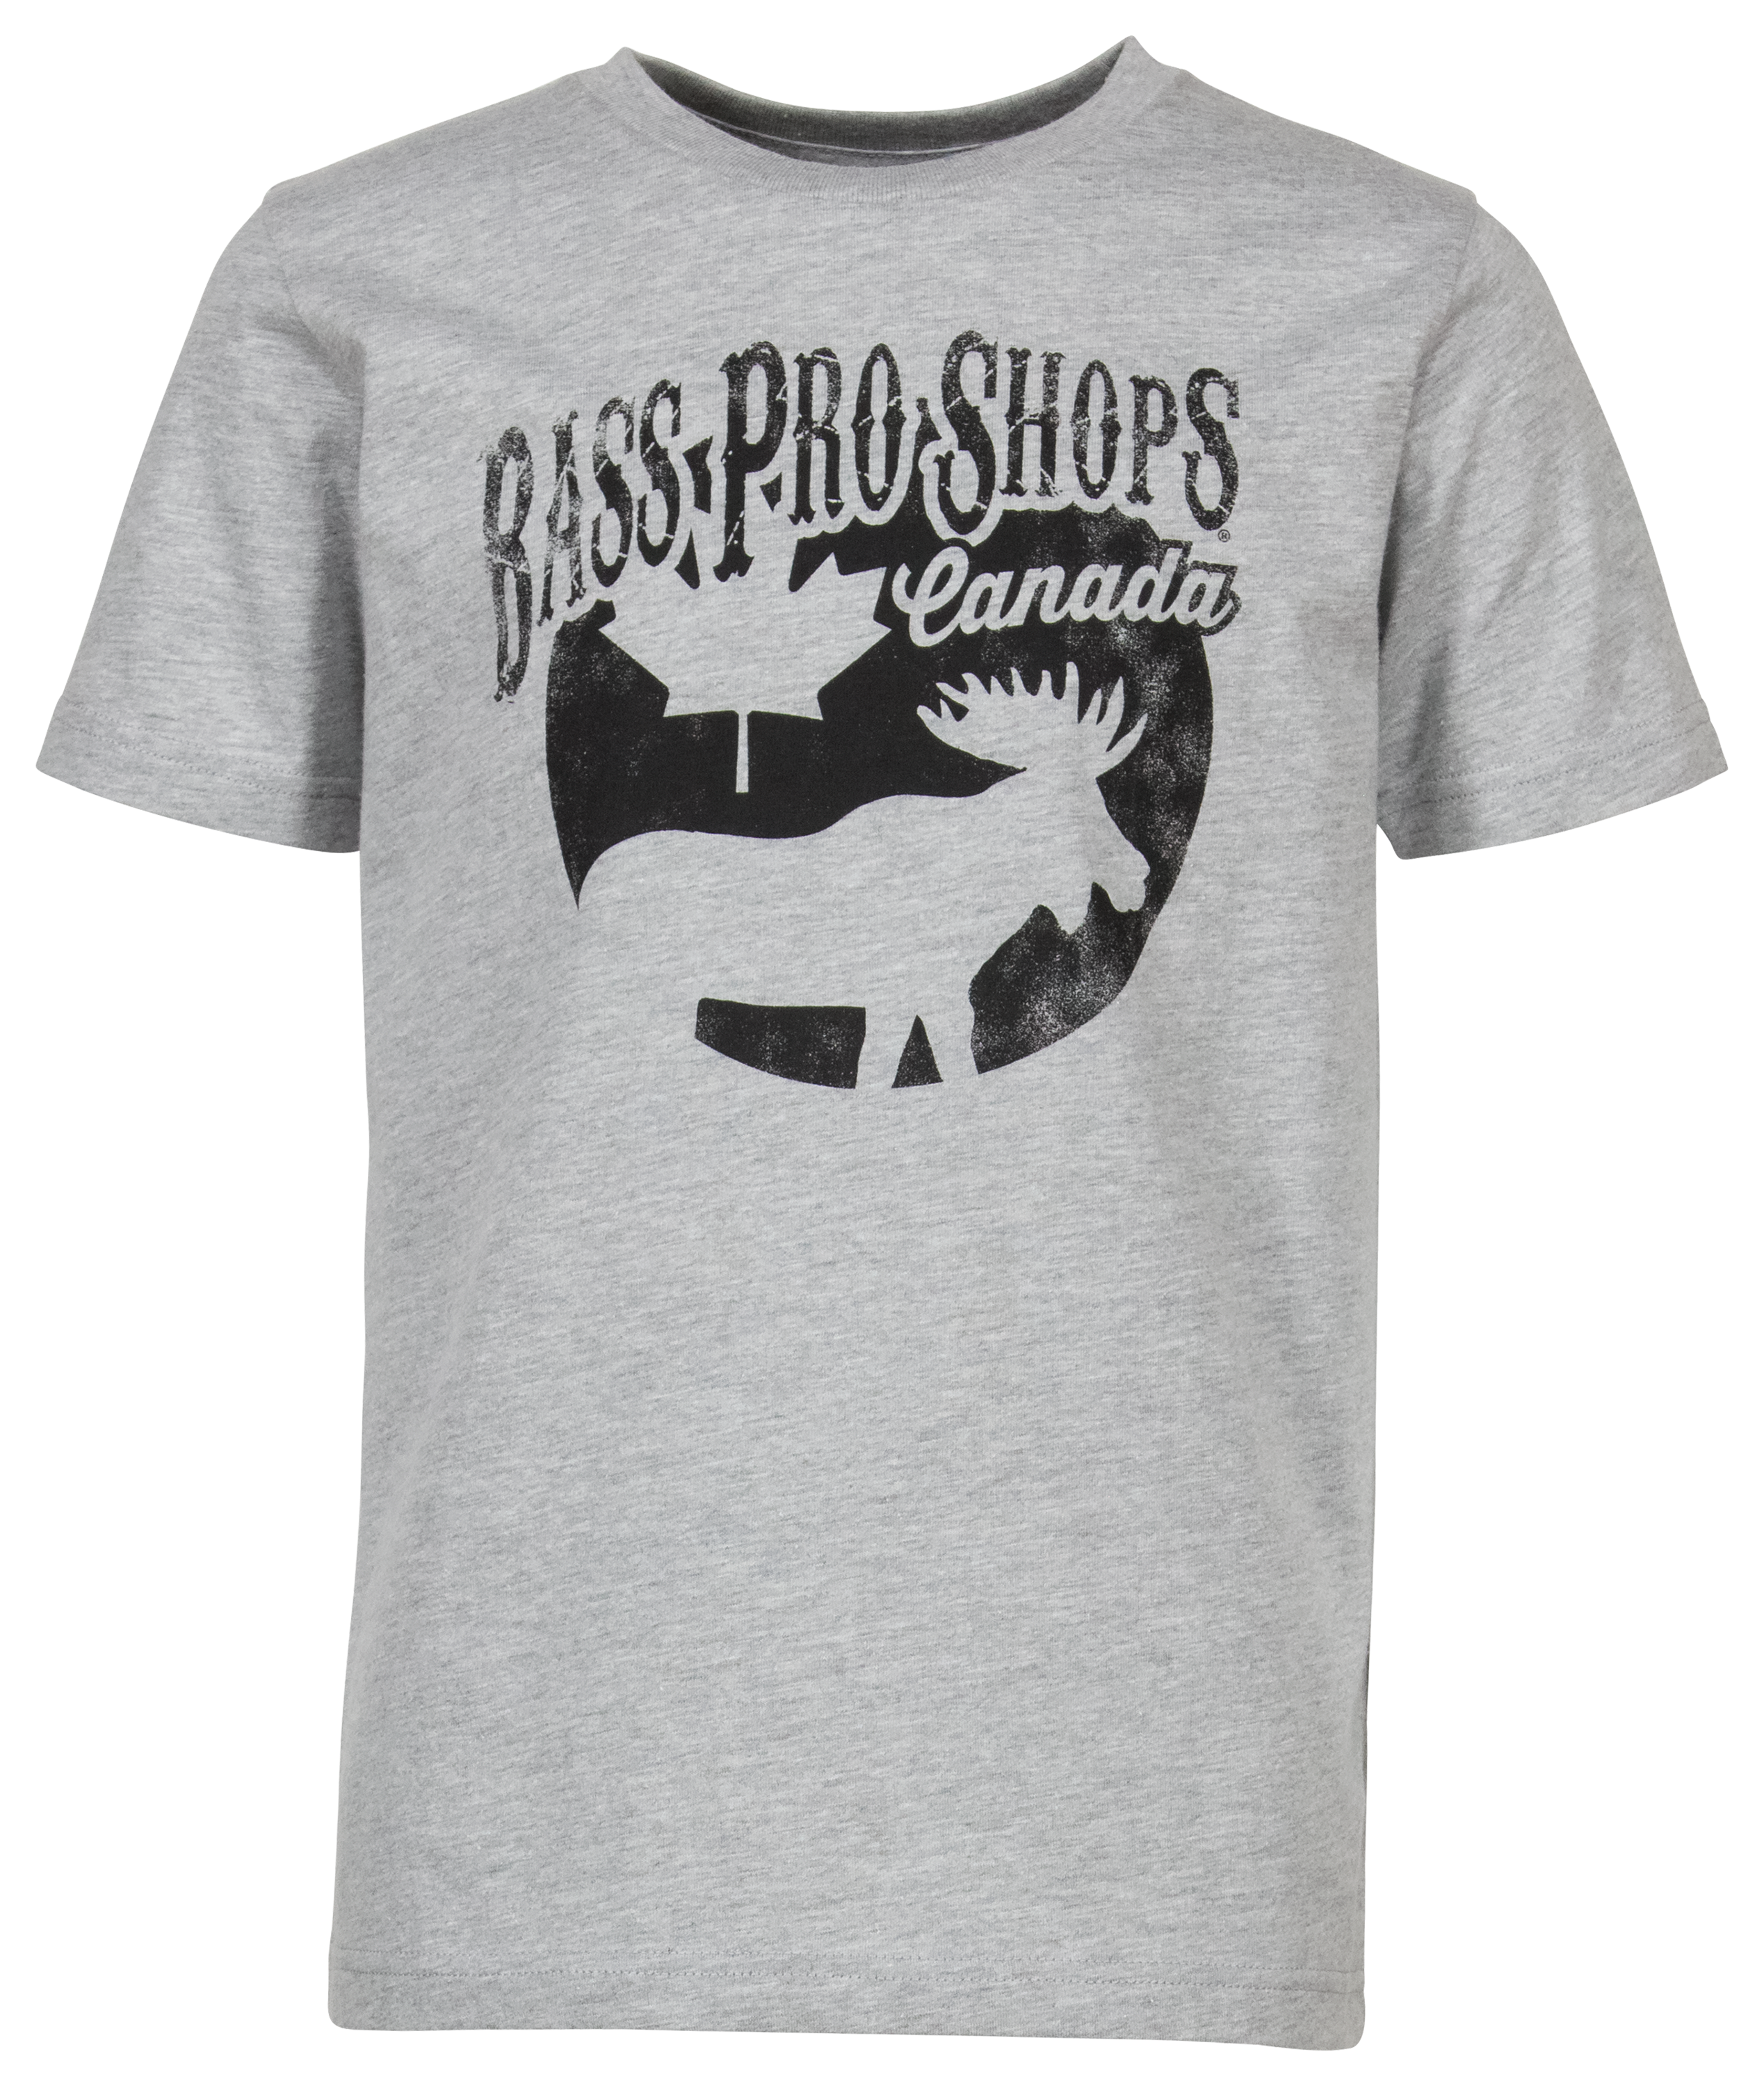 Bass Pro Shops Canadian Flag Short-Sleeve T-Shirt for Kids